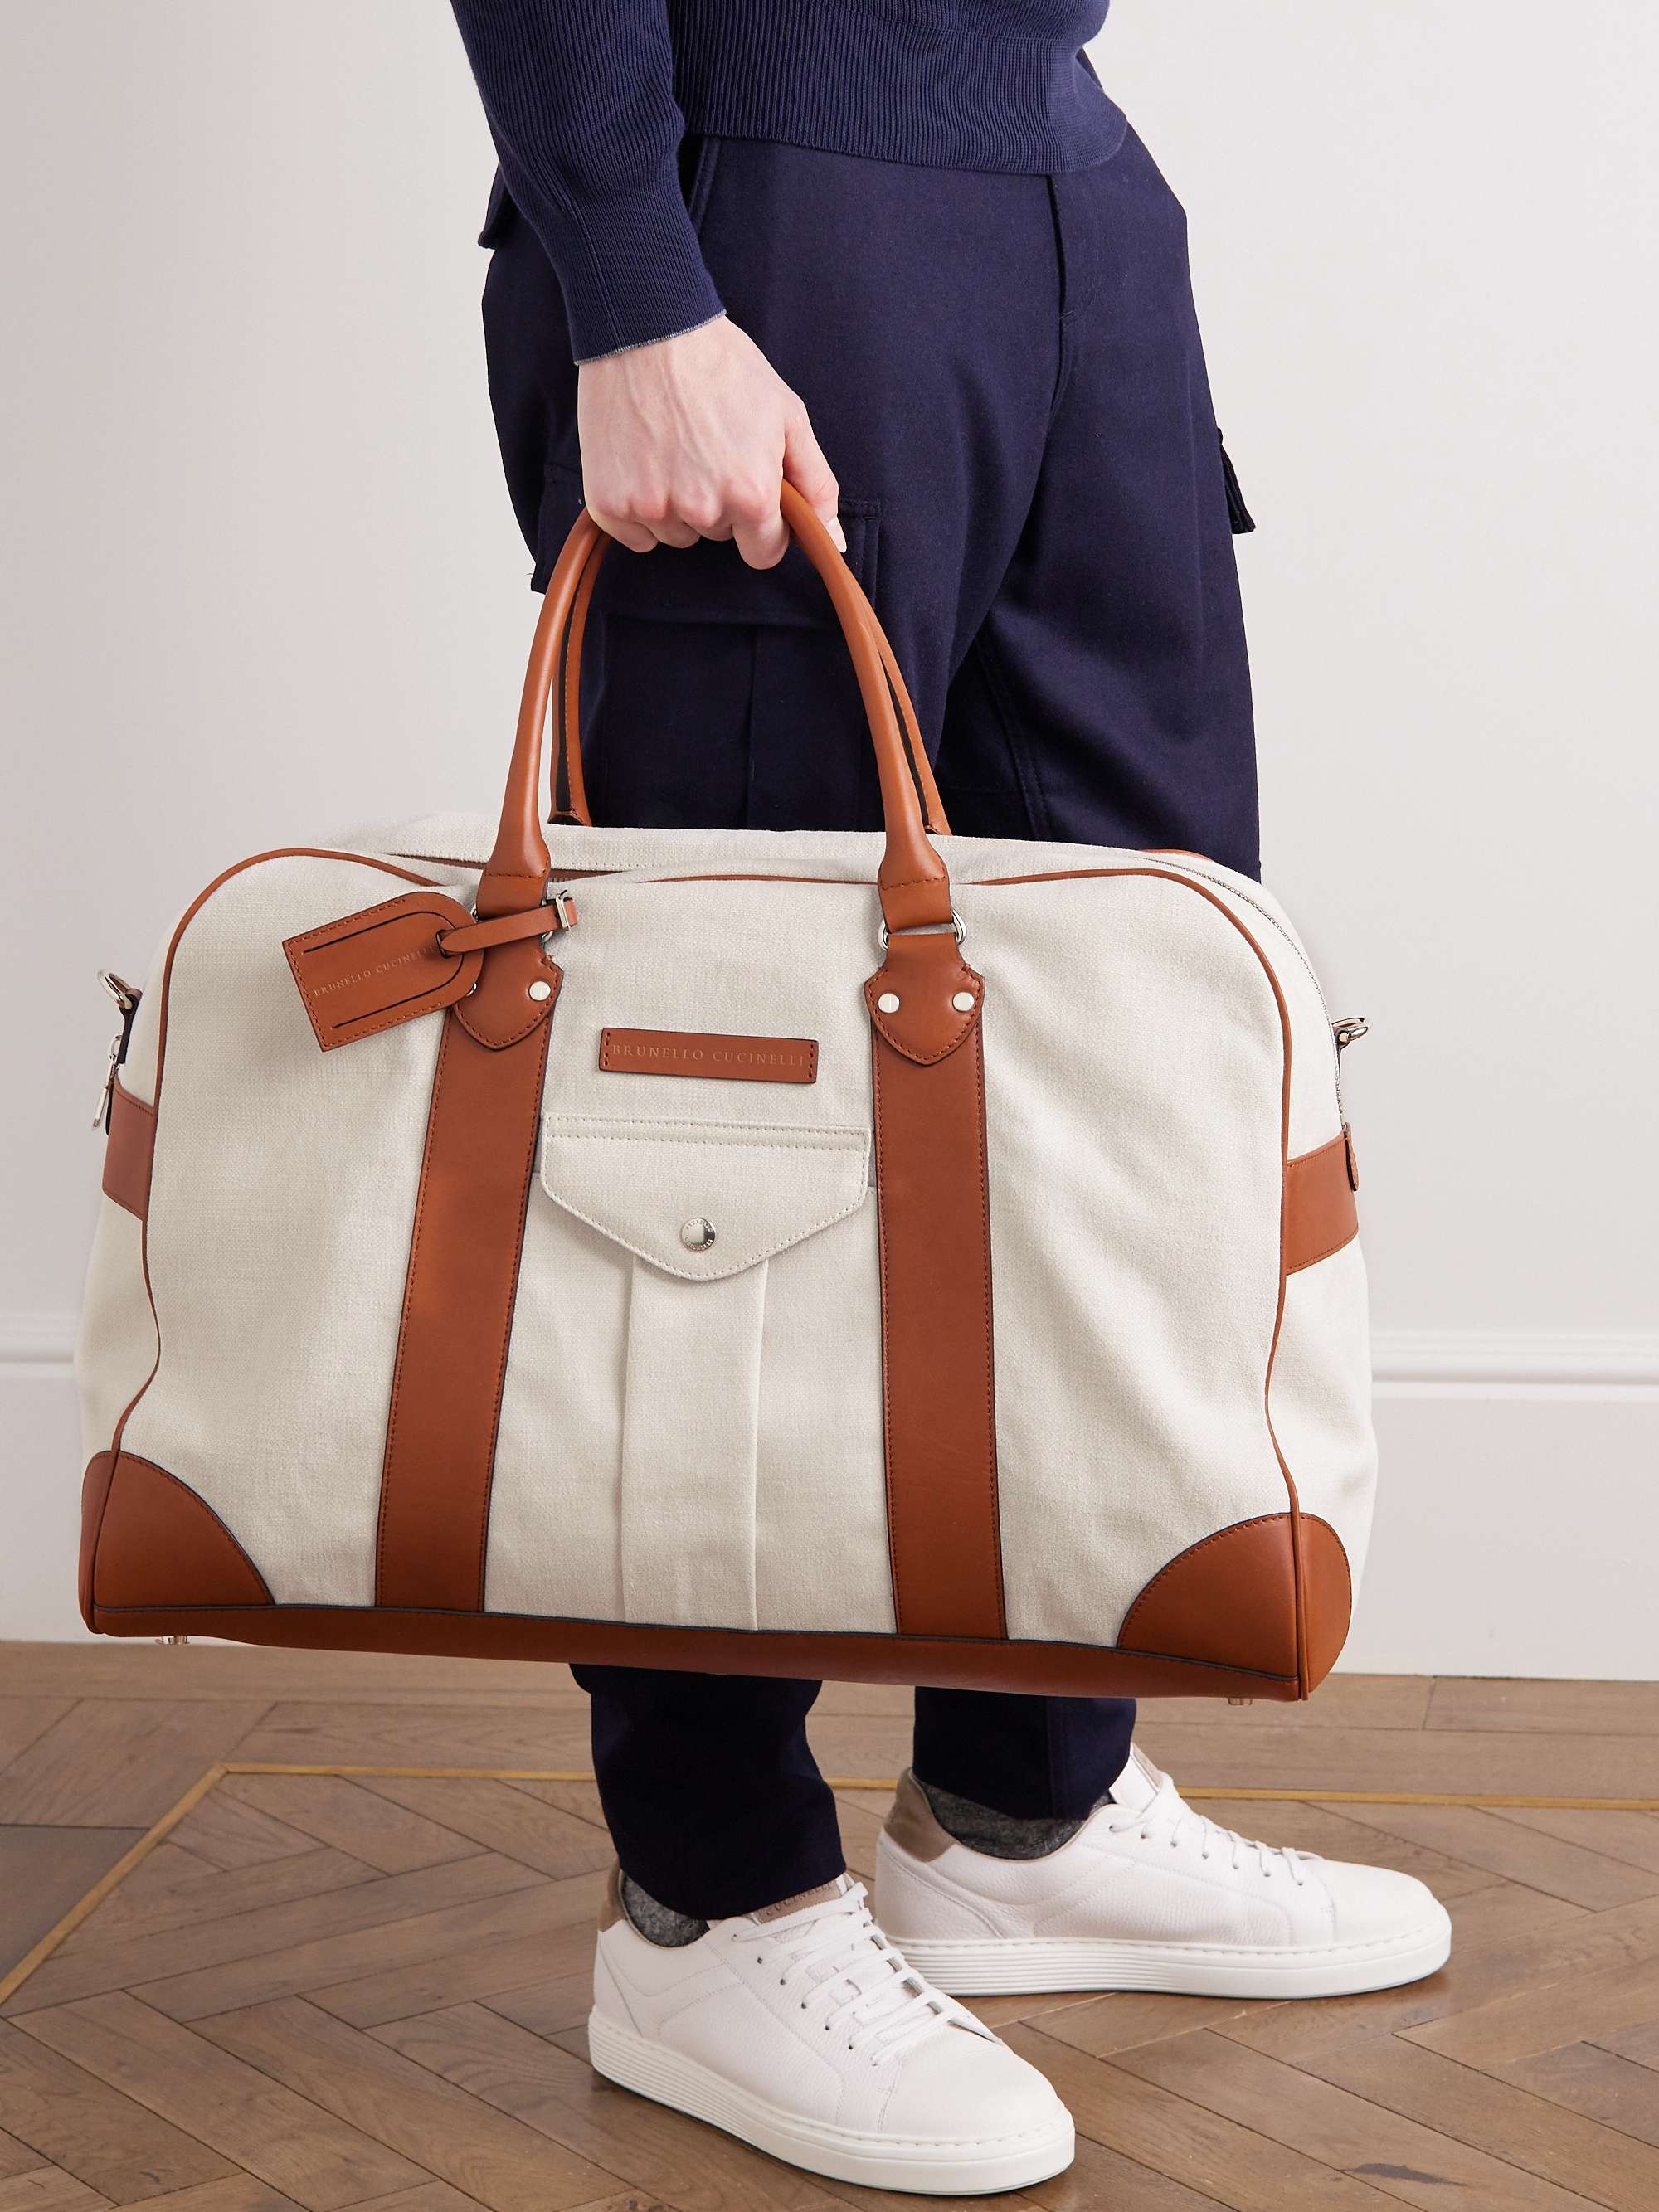 BRUNELLO CUCINELLI Borsa Leather-Trimmed Canvas Weekend Bag